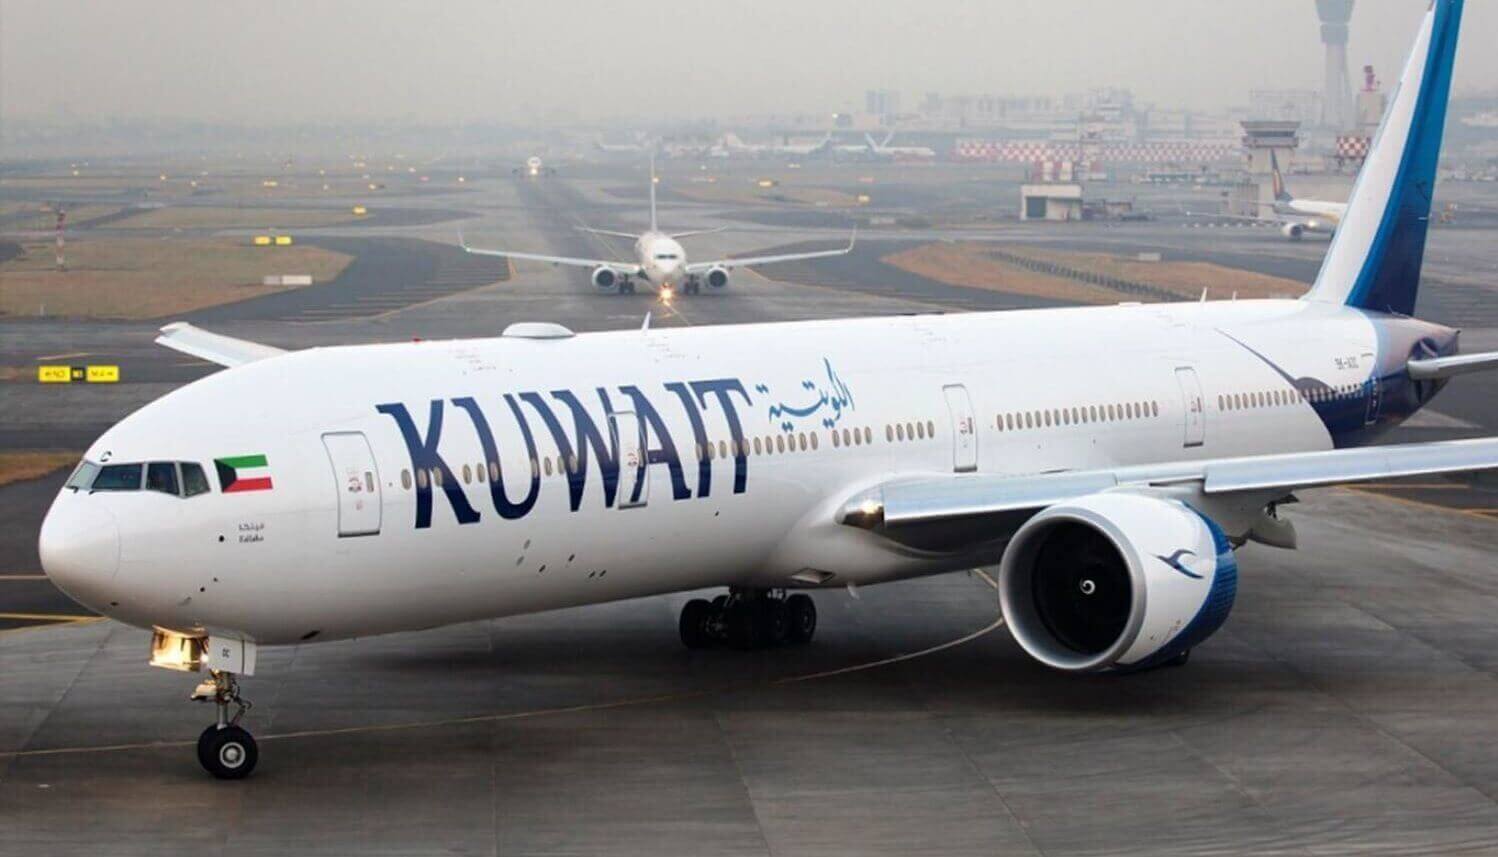 kuwait airways - Your Passage to Extraordinary